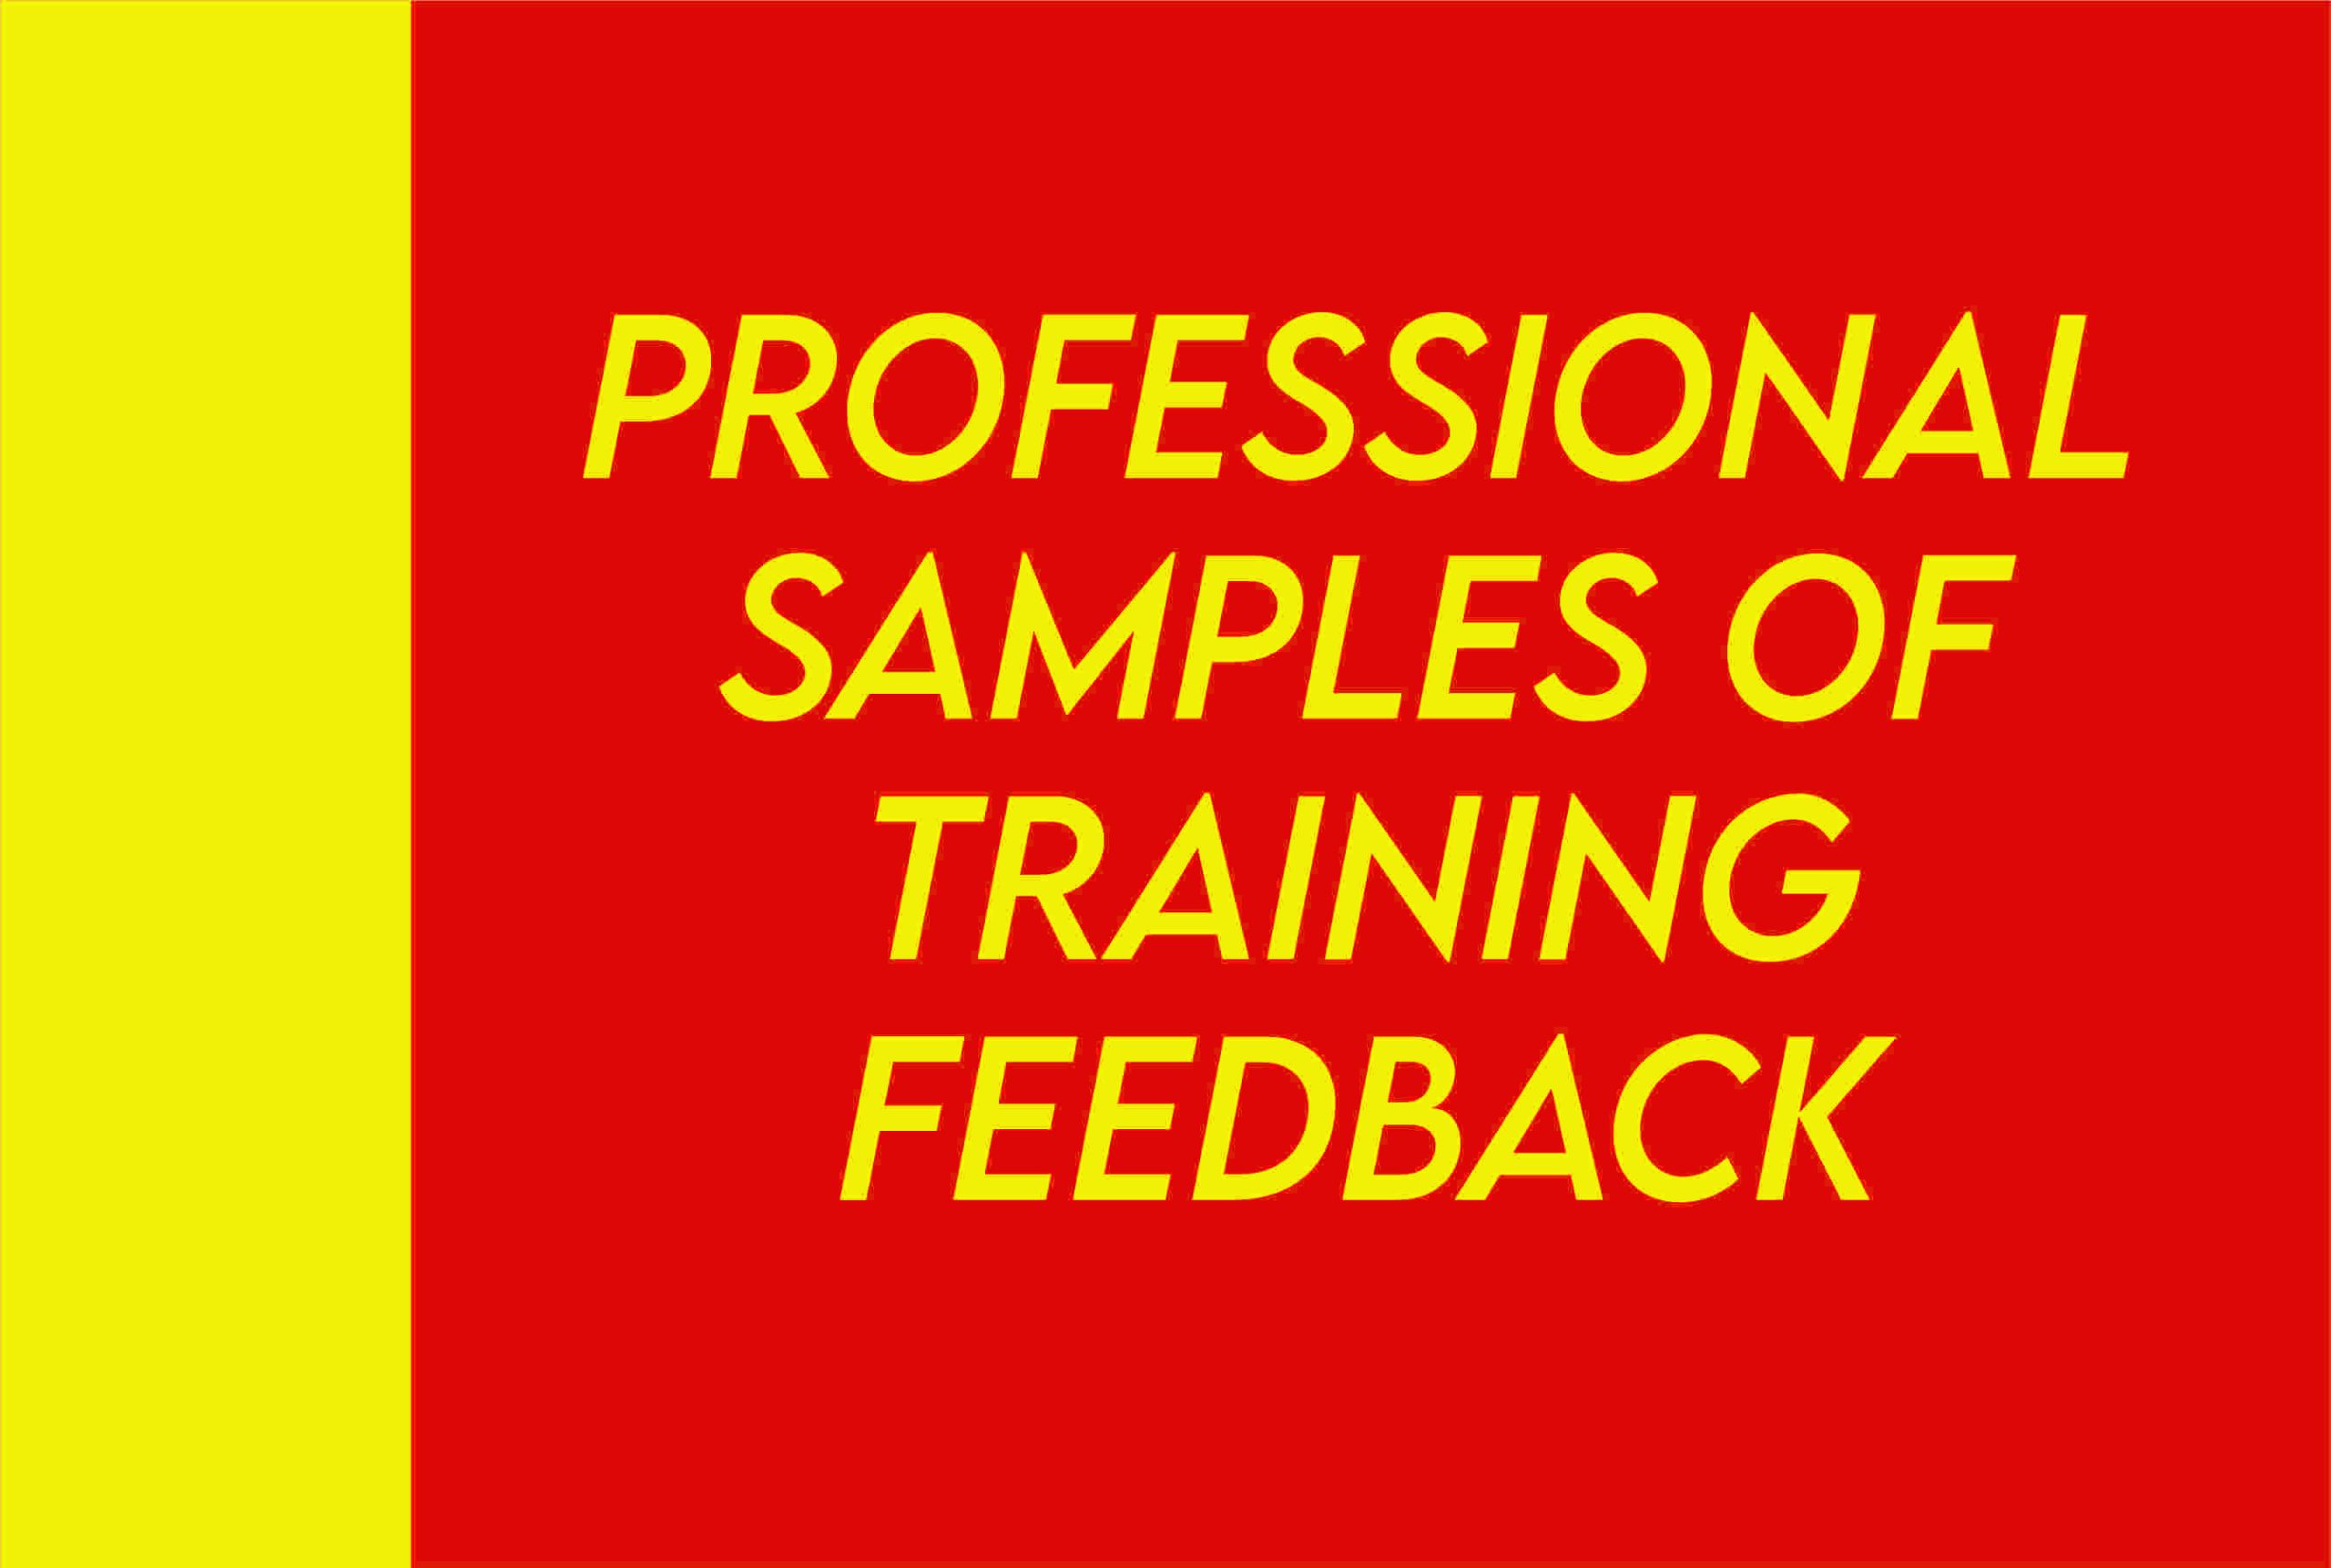 Training Feedback Sample Answers